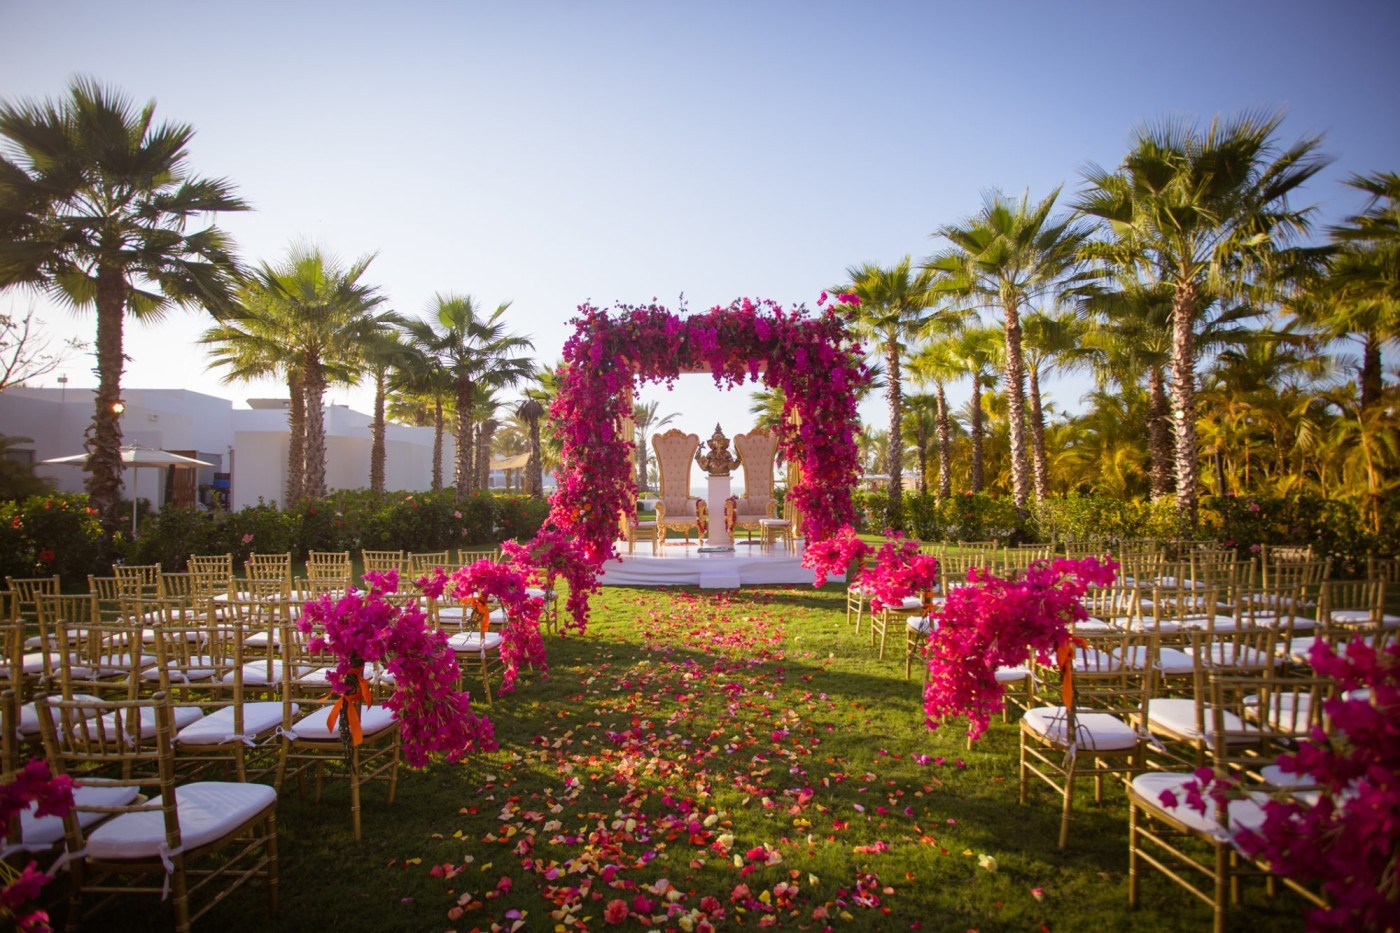 Atrium in pink prepared for a wedding